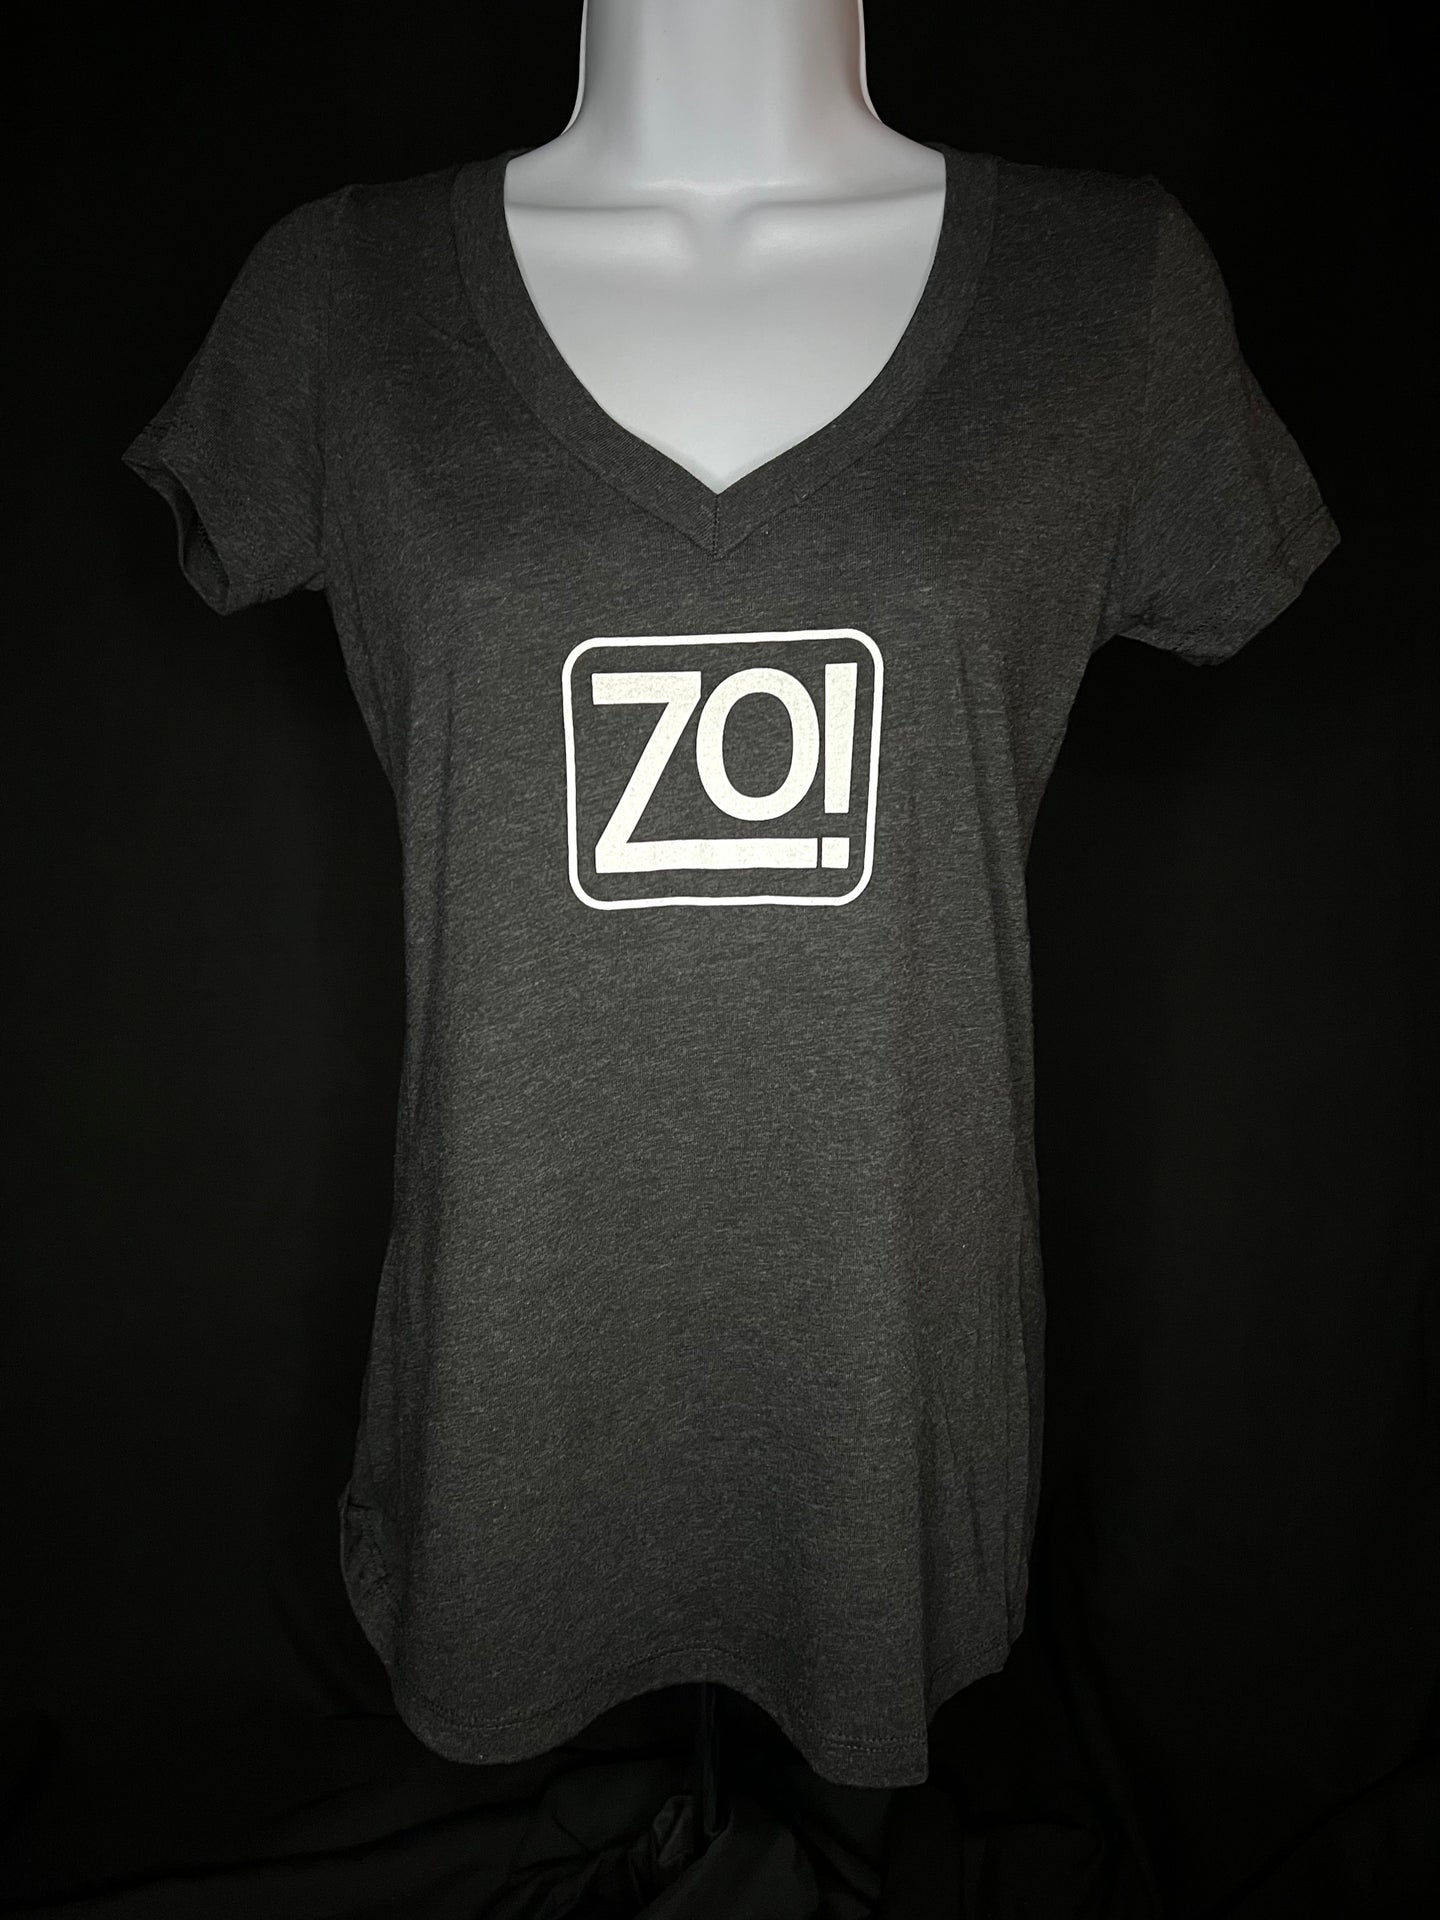 Zo! Black Tri-Blend V-Neck T-Shirt (Women's Fitted)